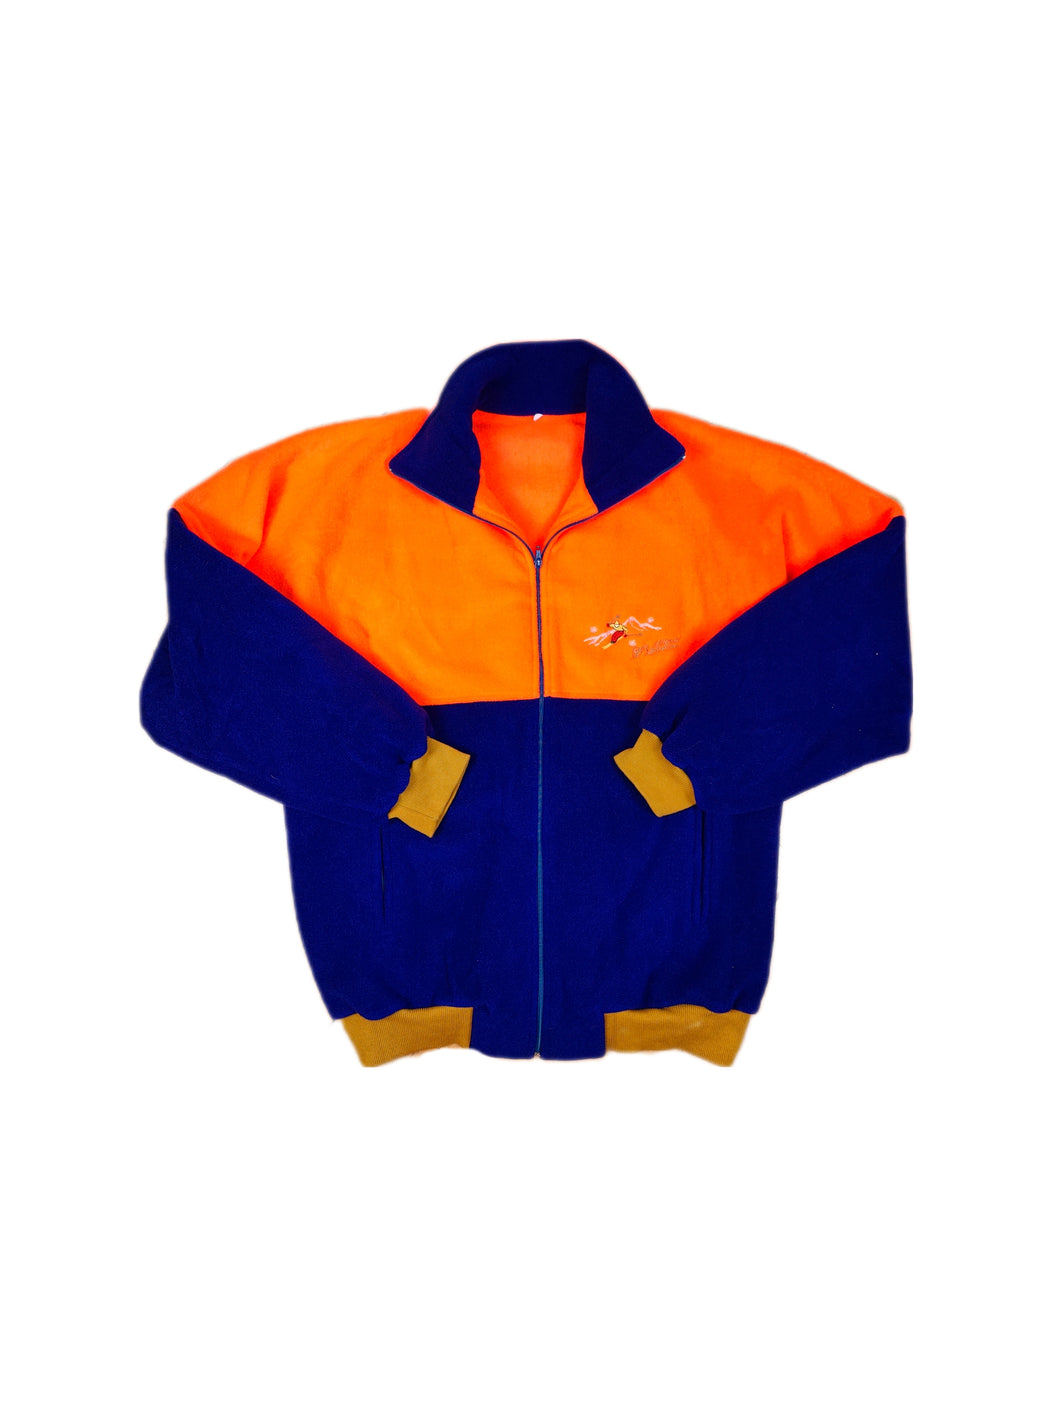 Vintage fleece jacket pullover jumper cardigan blue orange thick ski embroidery unisex men XL